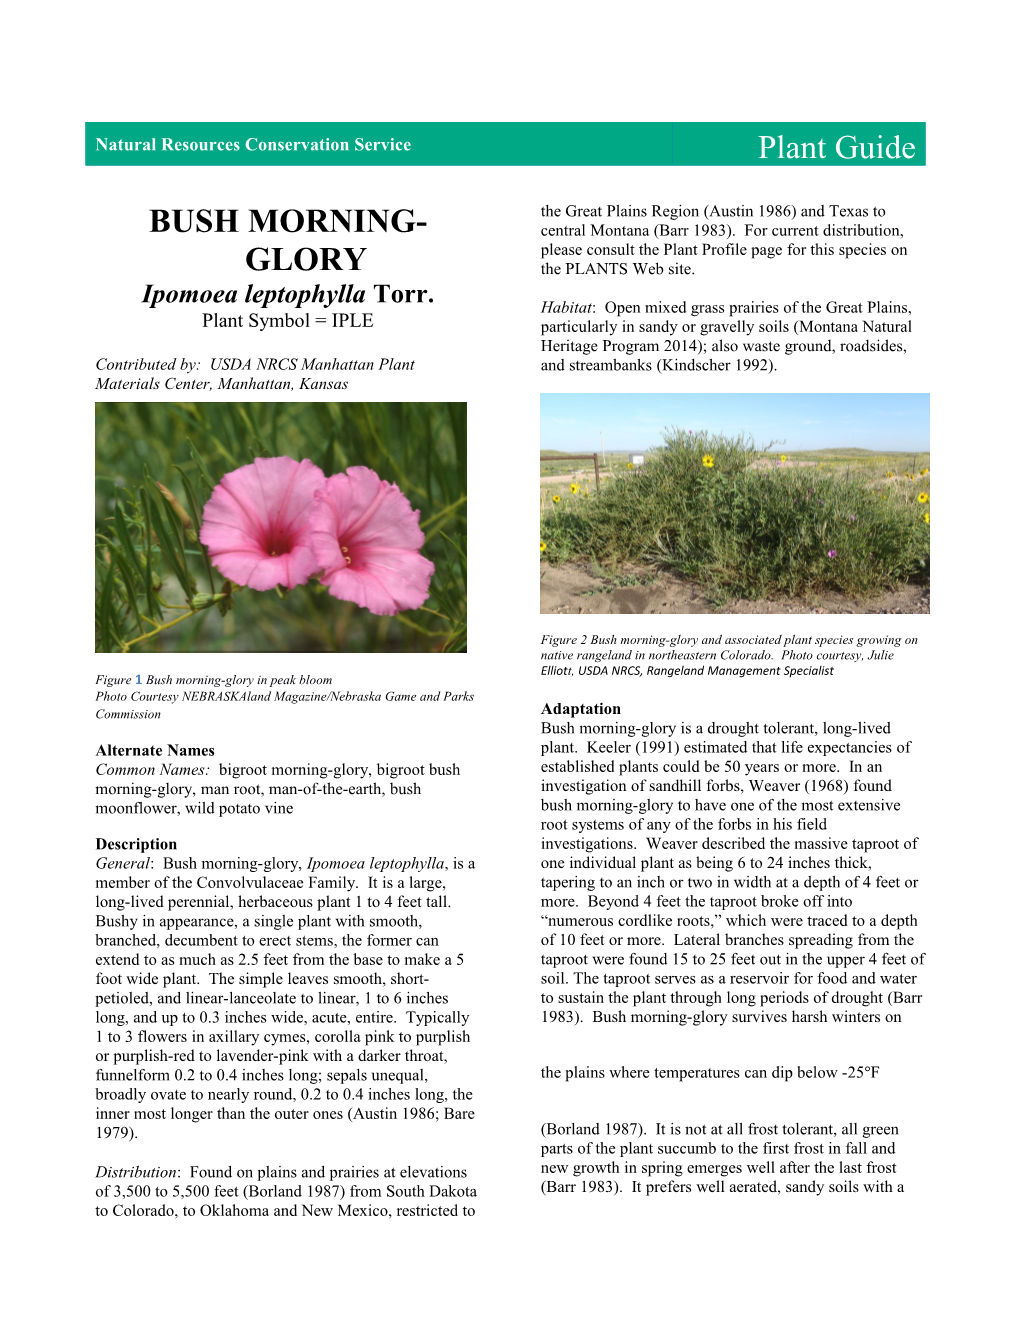 Bush Morning-Glory Plant Guide